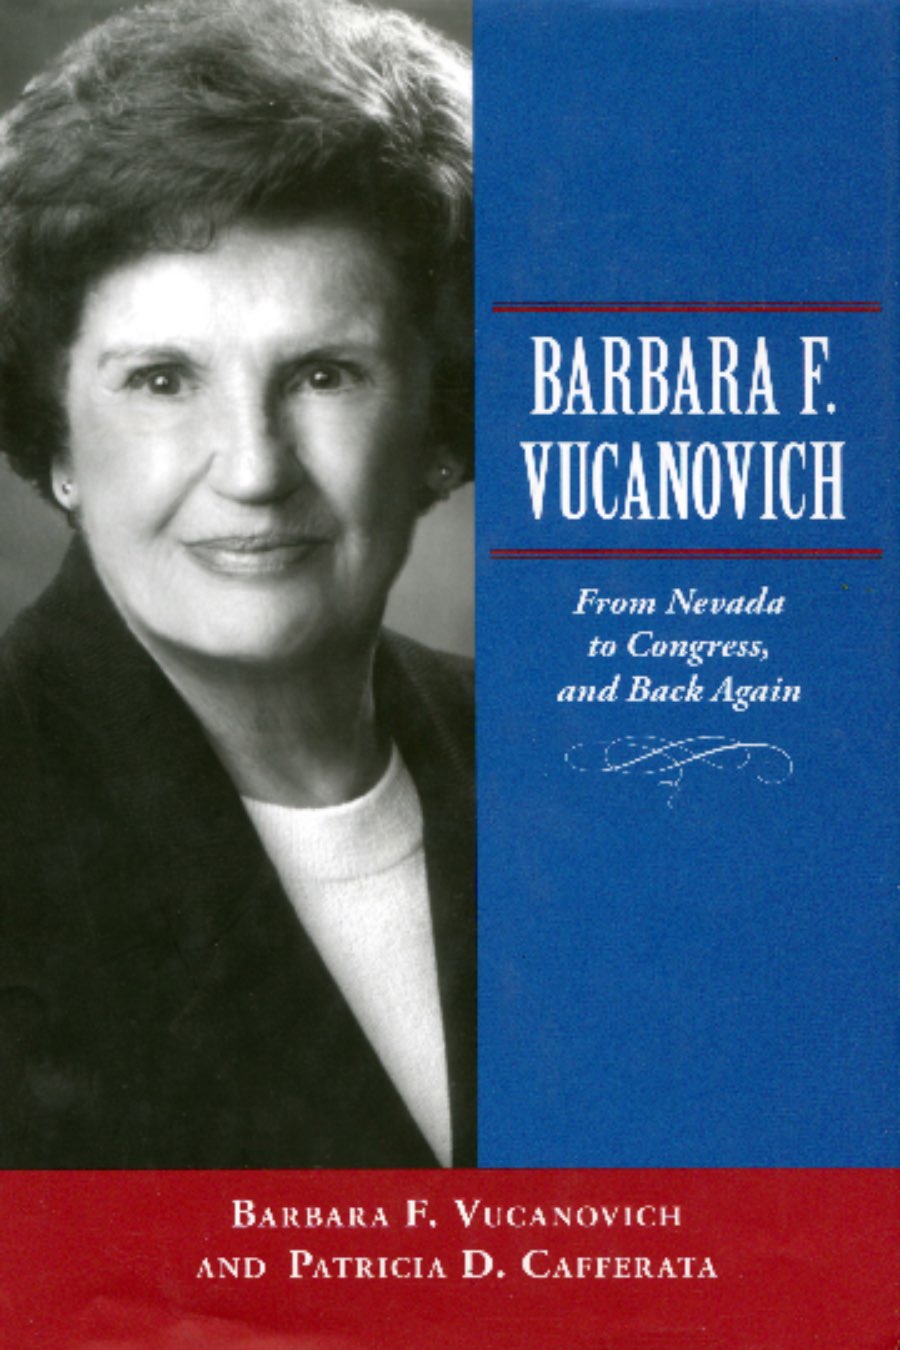 barbara-f-vucanovich-from-nevada-to-congress-and-back-again Image